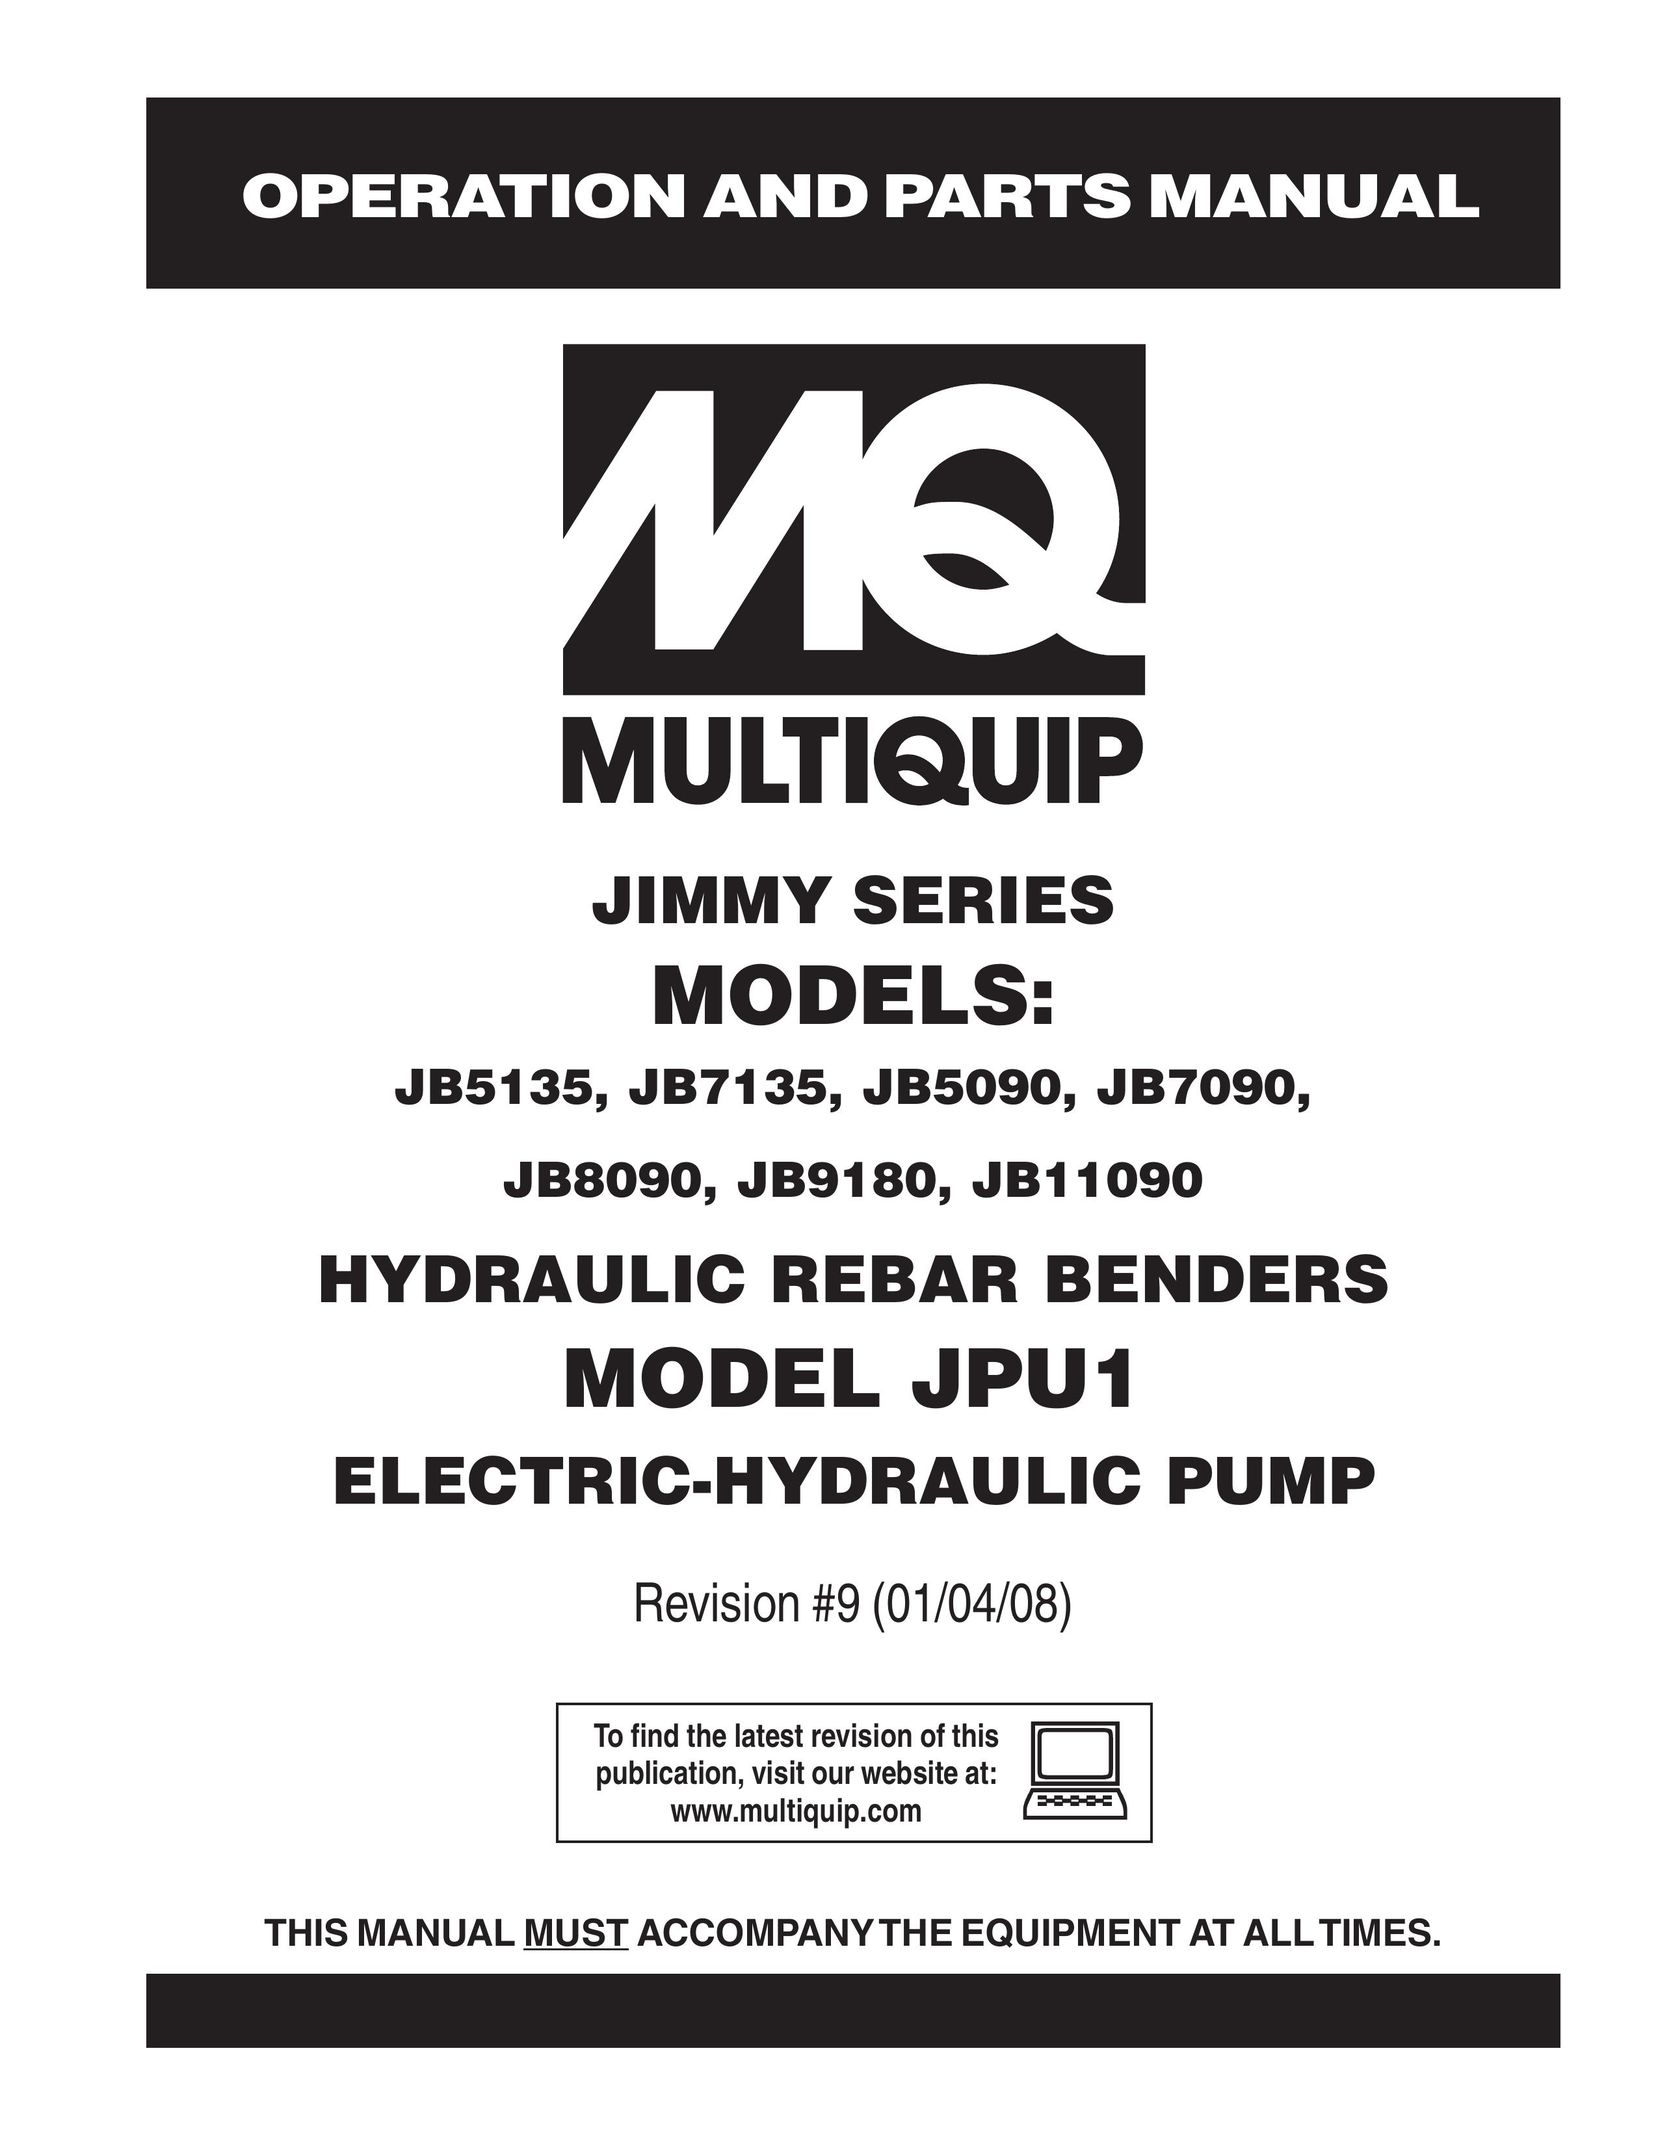 Multiquip JB8090 Heat Pump User Manual